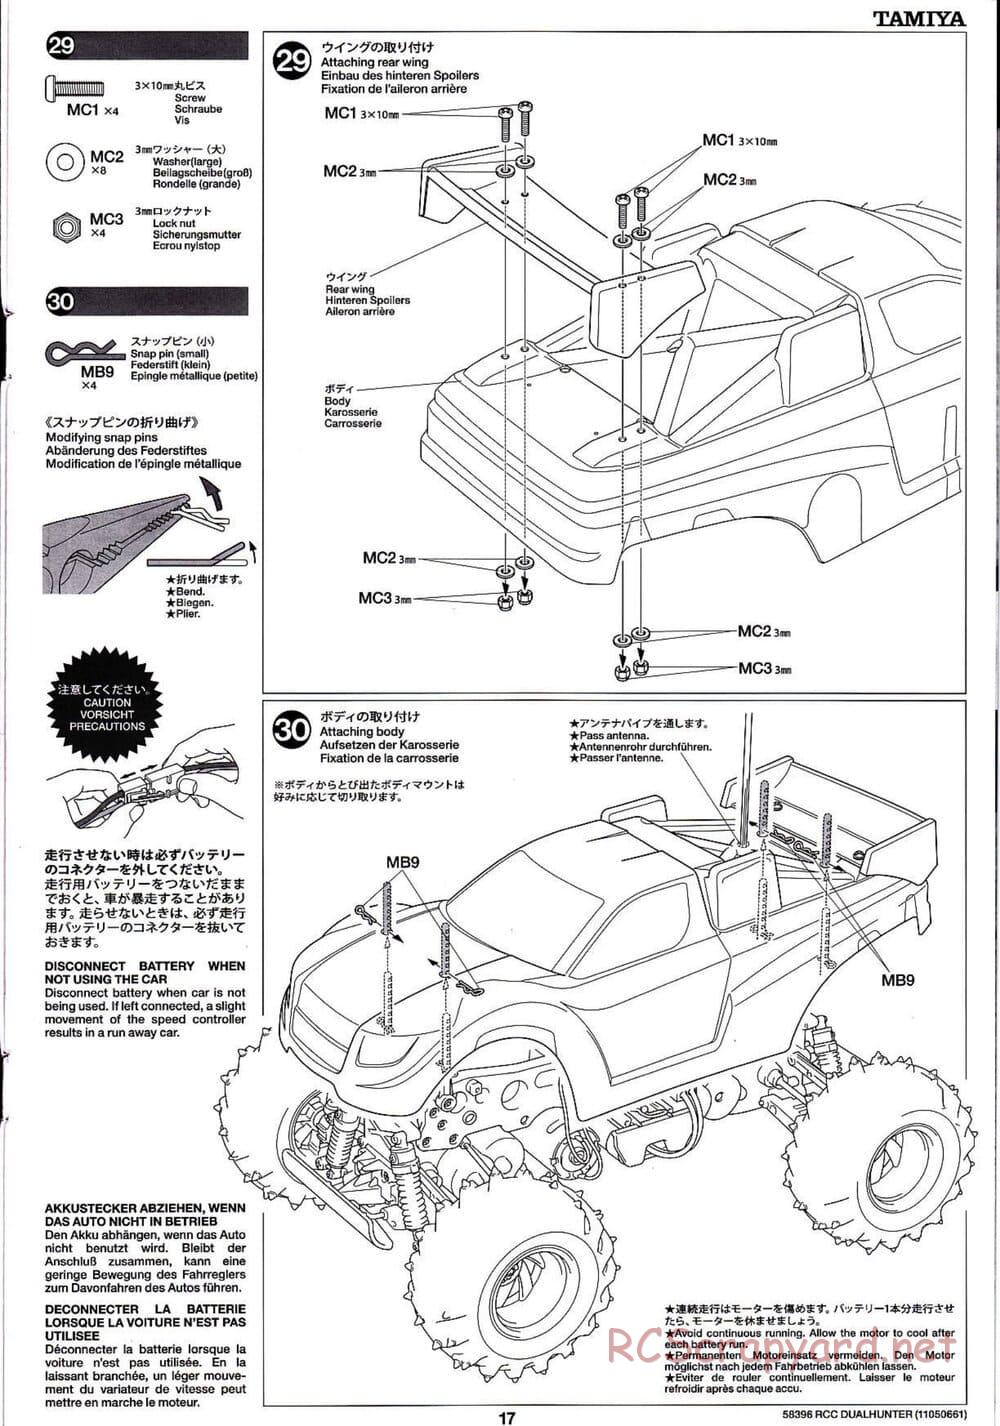 Tamiya - Dualhunter - WR-01 Chassis - Manual - Page 17